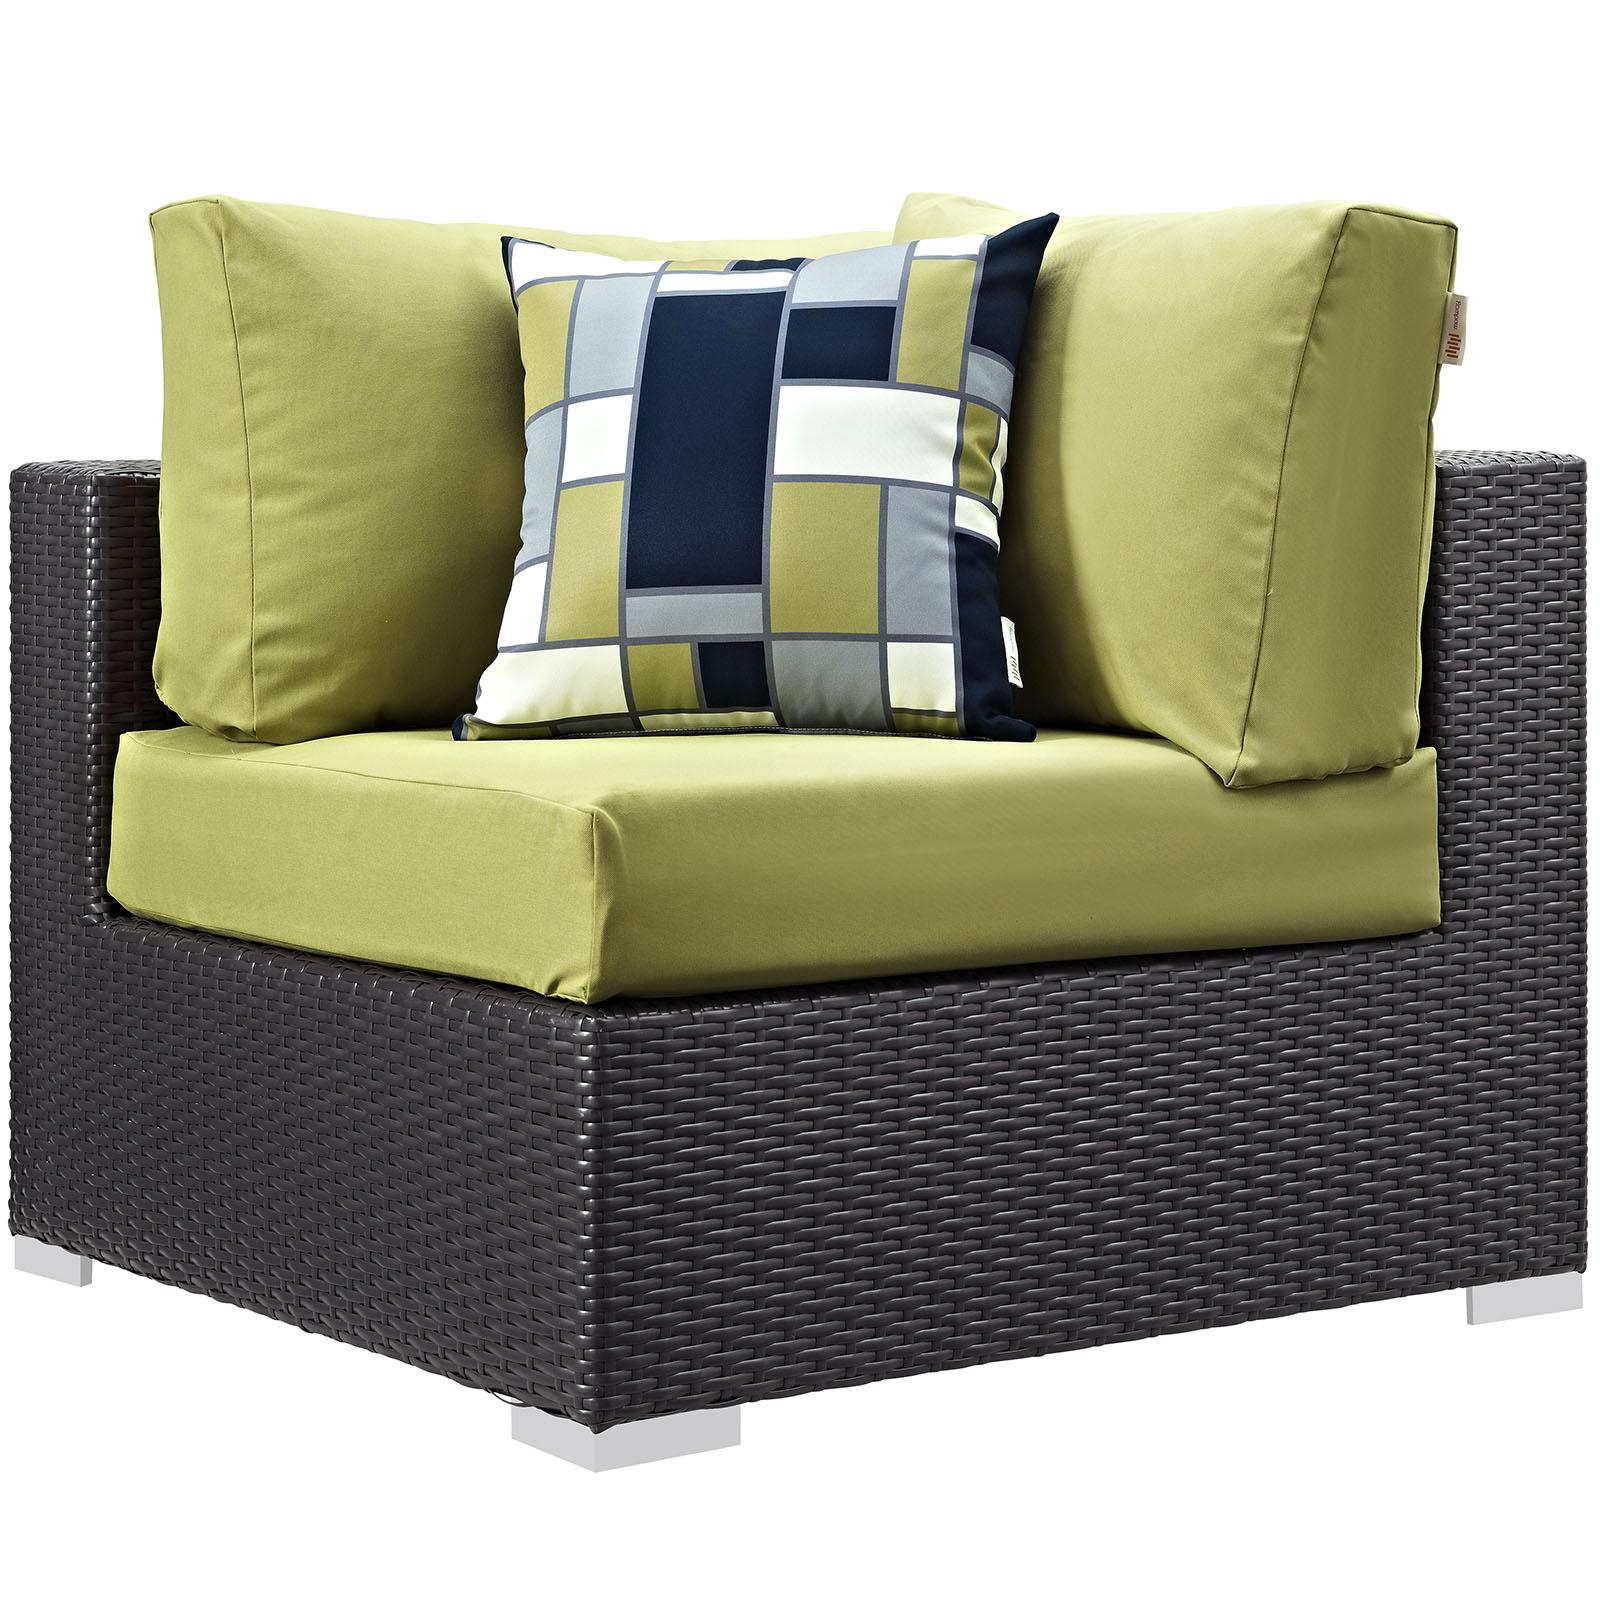 Modway Furniture Modern Convene 7 Piece Outdoor Patio Sectional Set - EEI-2350